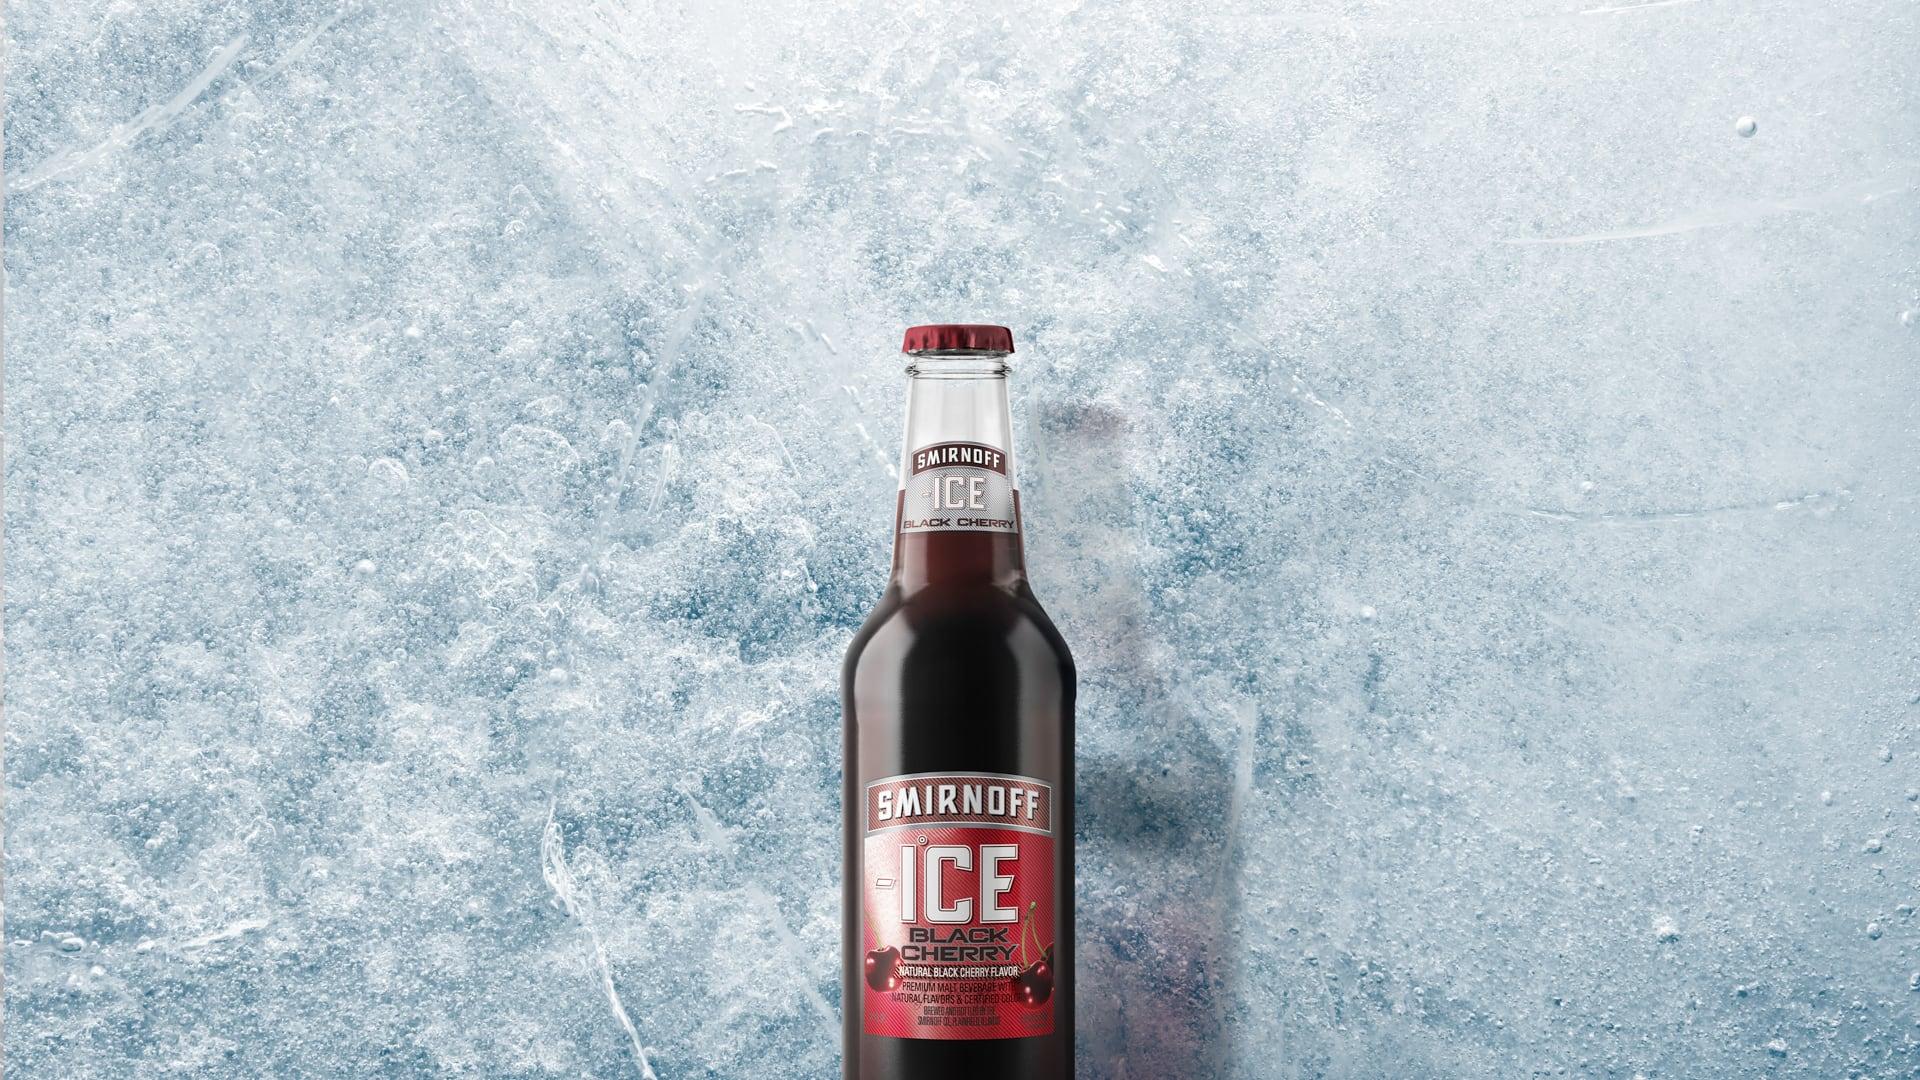 Smirnoff Ice Black Cherry on a Icy background